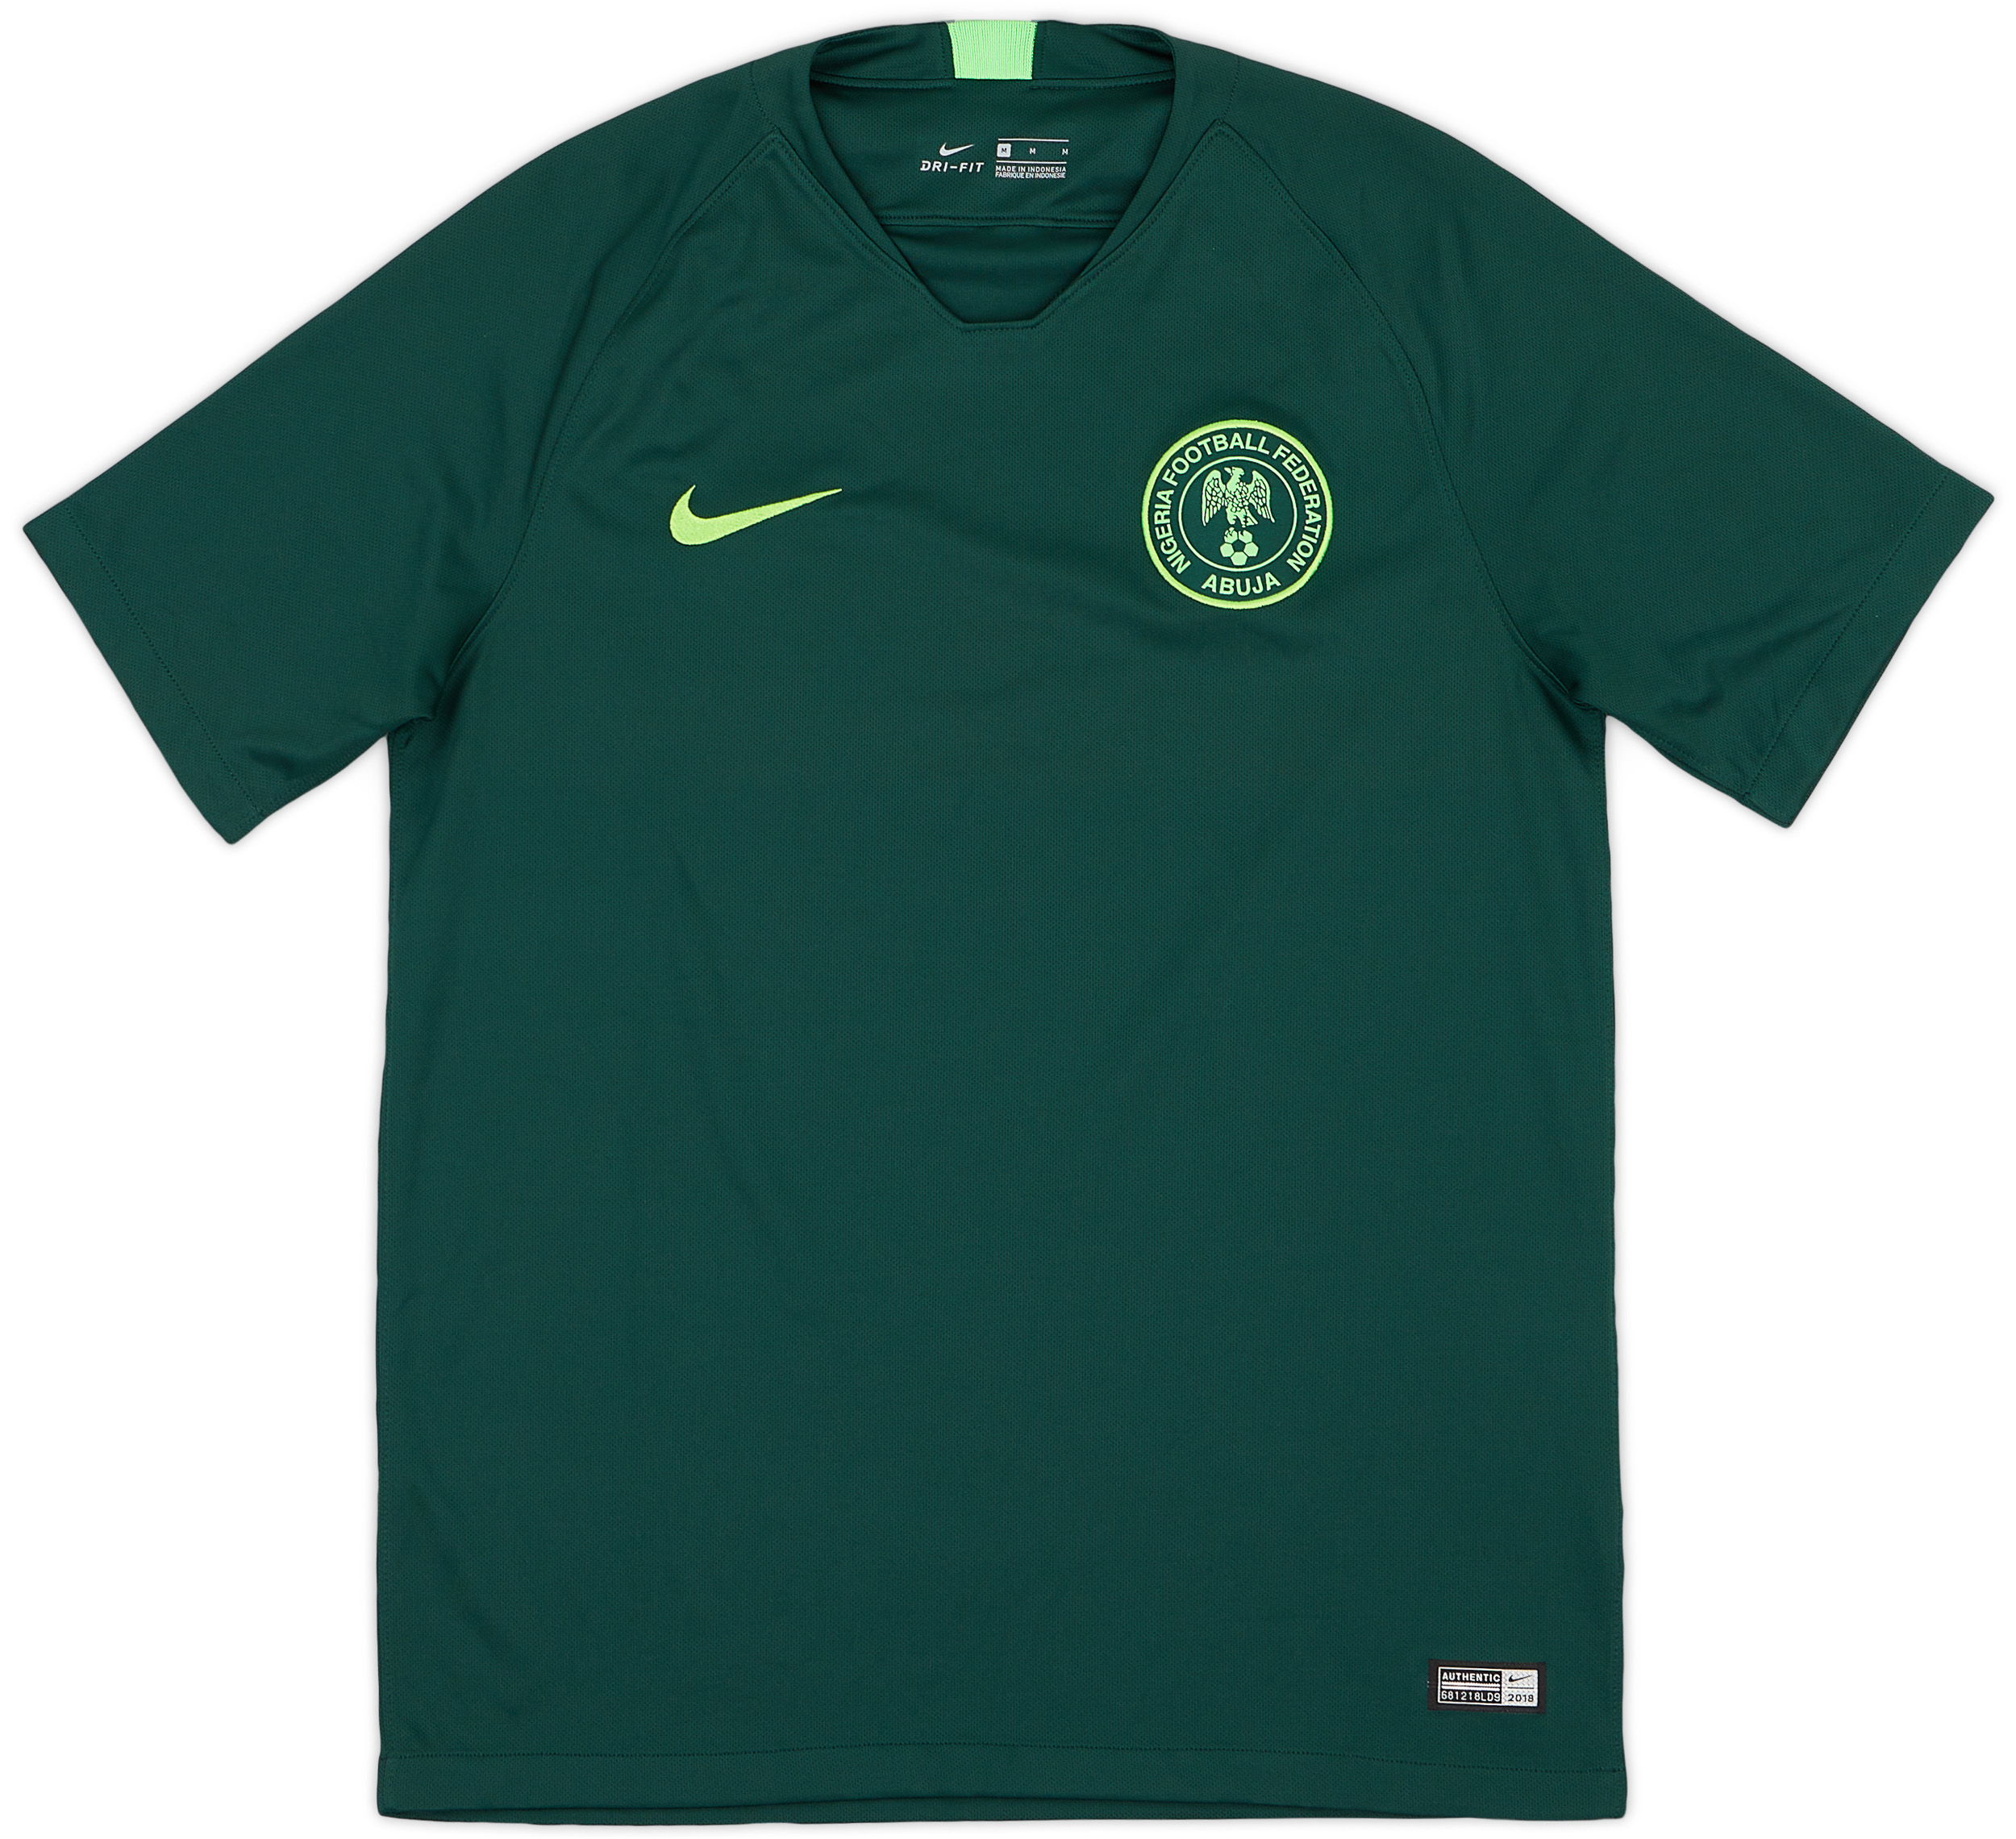 2018-19 Nigeria Away Shirt - 9/10 - ()